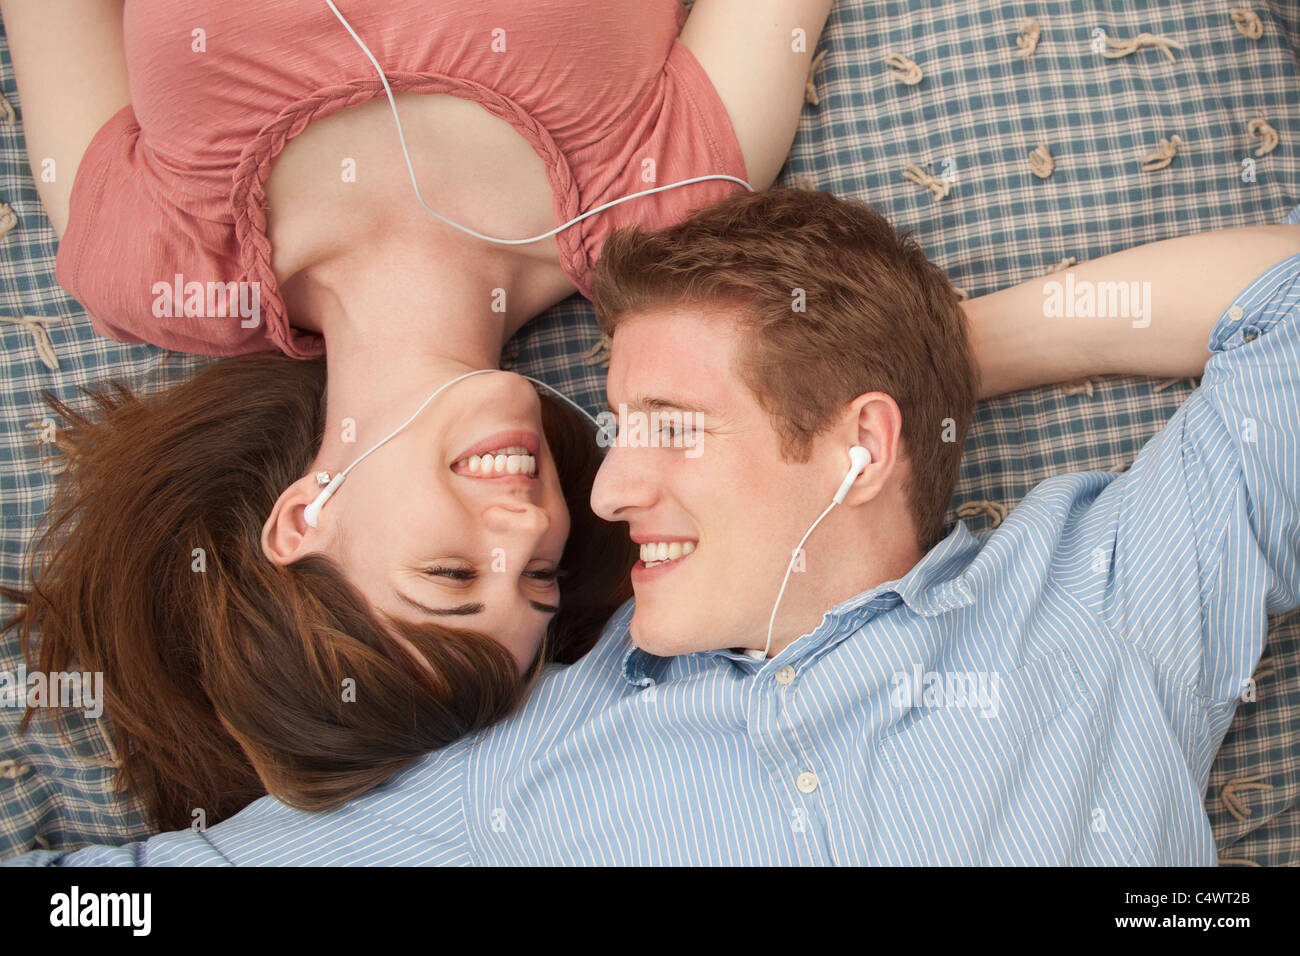 USA,Utah,Provo,Young couple with mp3 player lying on blanket Stock Photo